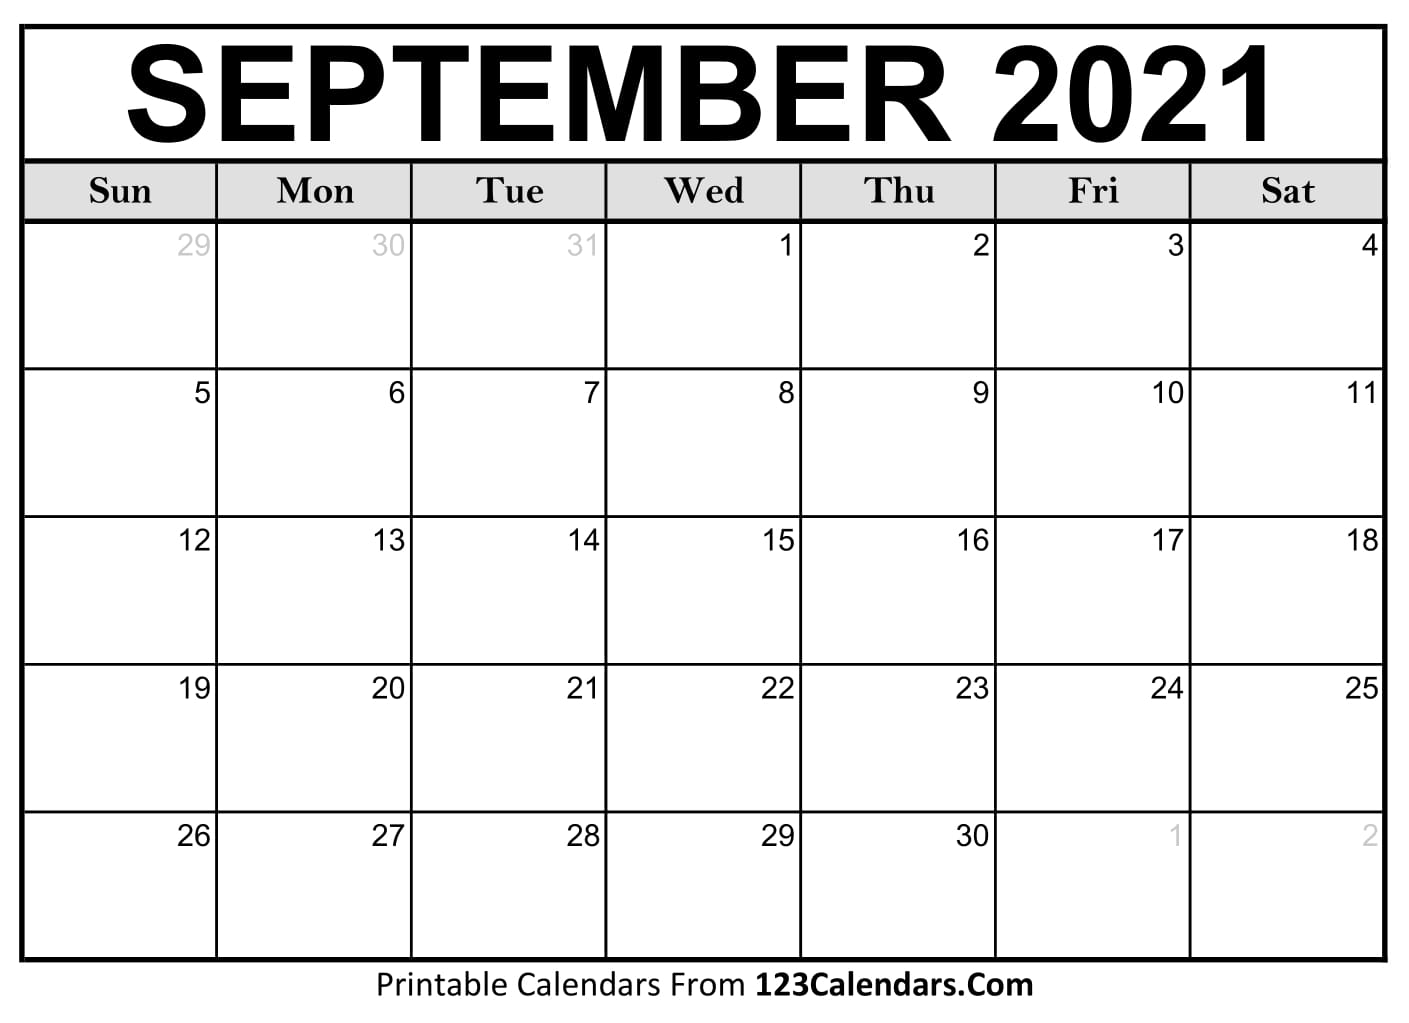 Printable September 2021 Calendar Templates 123Calendars